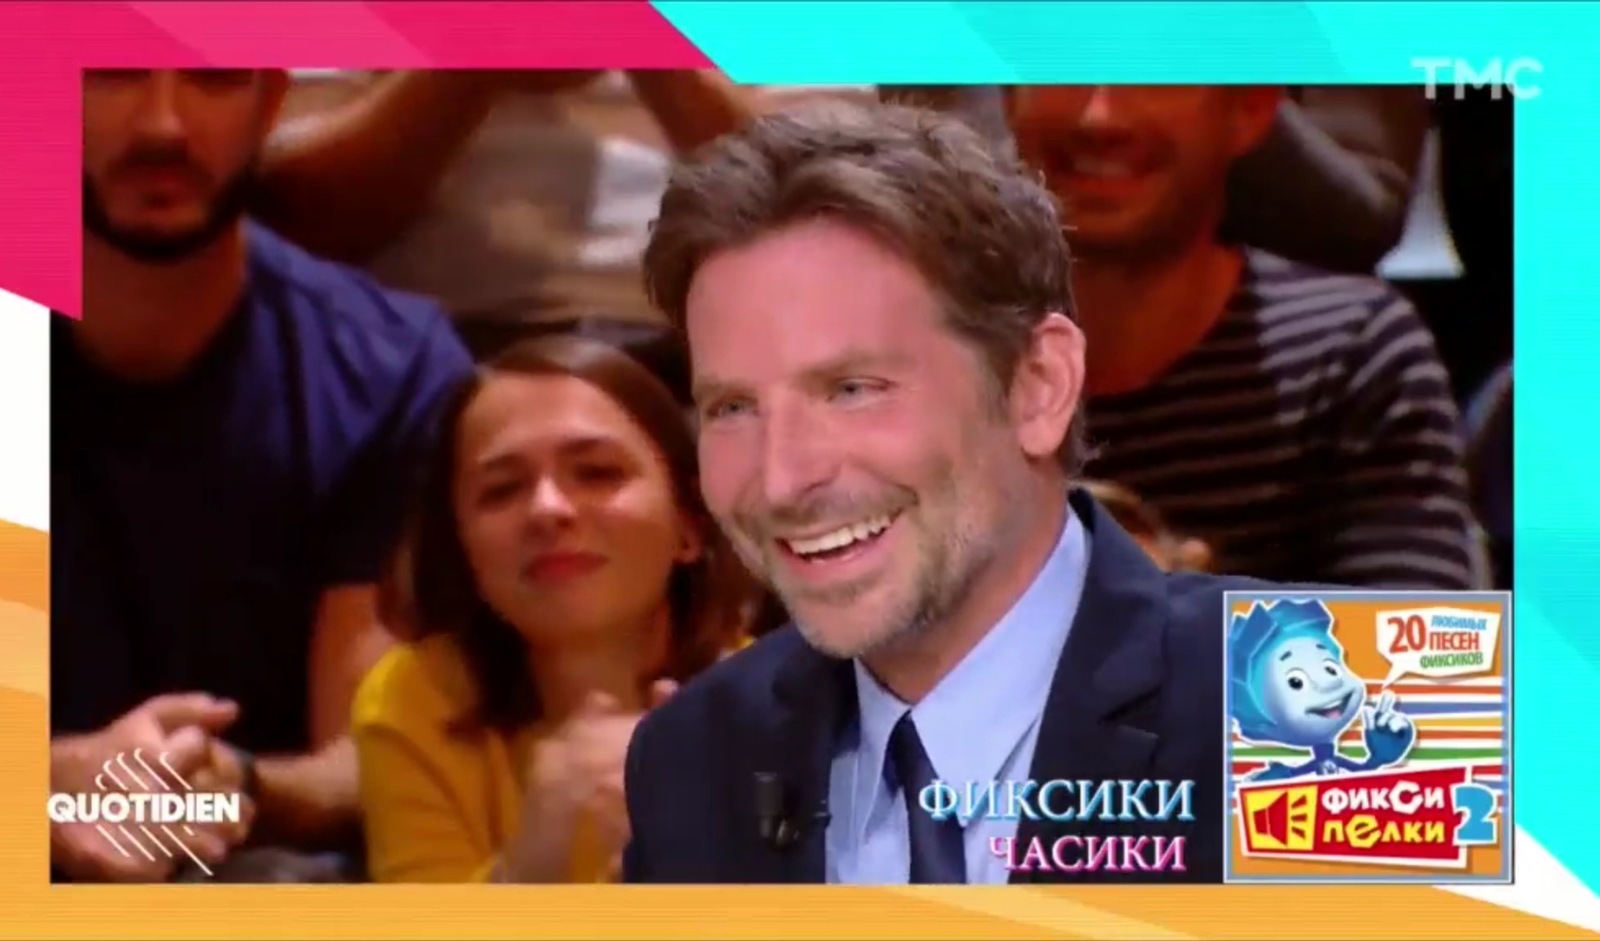 Bradley Cooper and Russian children's songs - My, Bradley Cooper, Irina Shayk, Funny, Humor, Longpost, Video, Celebrities